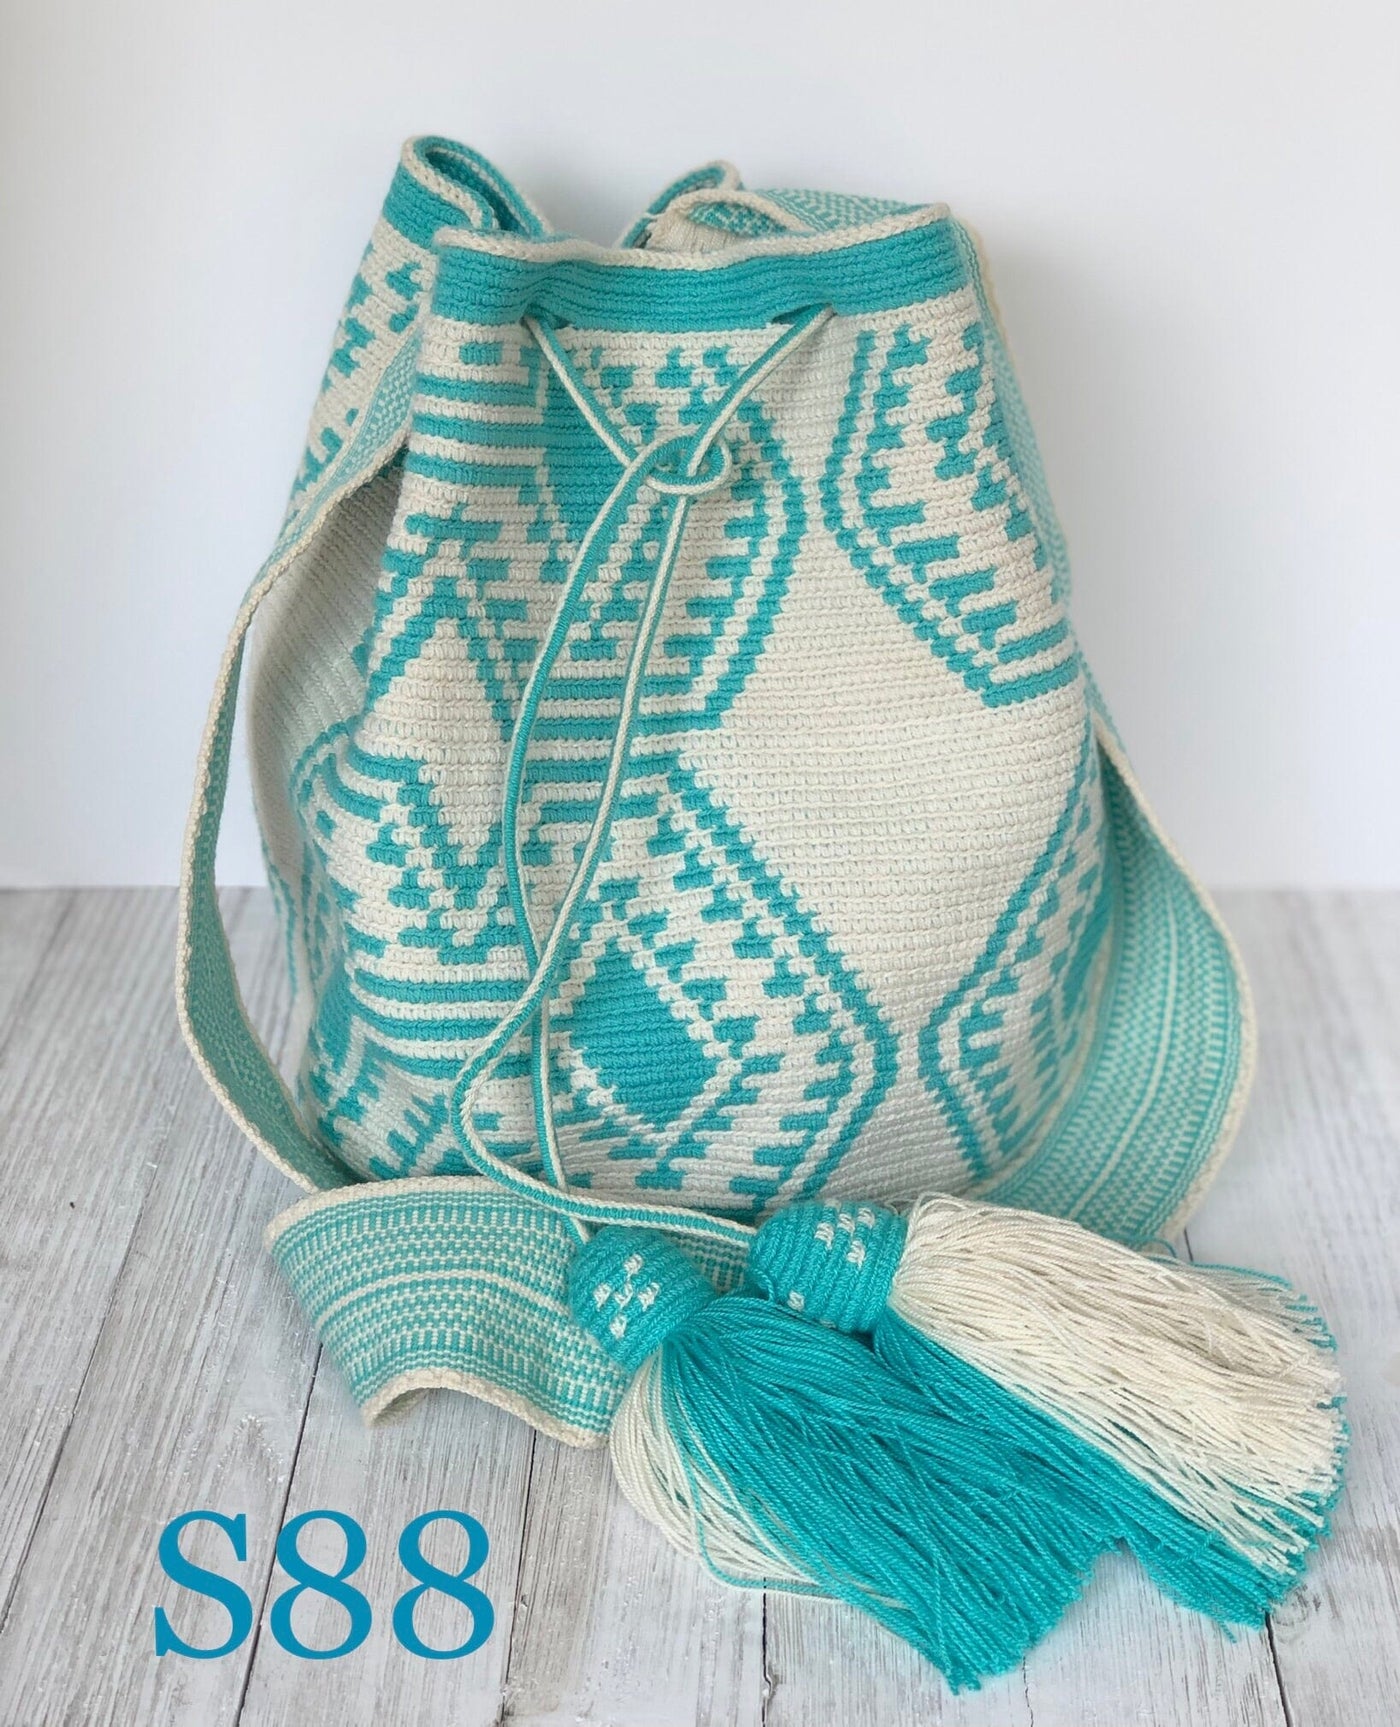 Turquoise BLUE Love | Special/Premium Crochet Bags - (L) Premium One thread Crochet Bag - Crossbody Boho Bag S88-Special Turquoise 